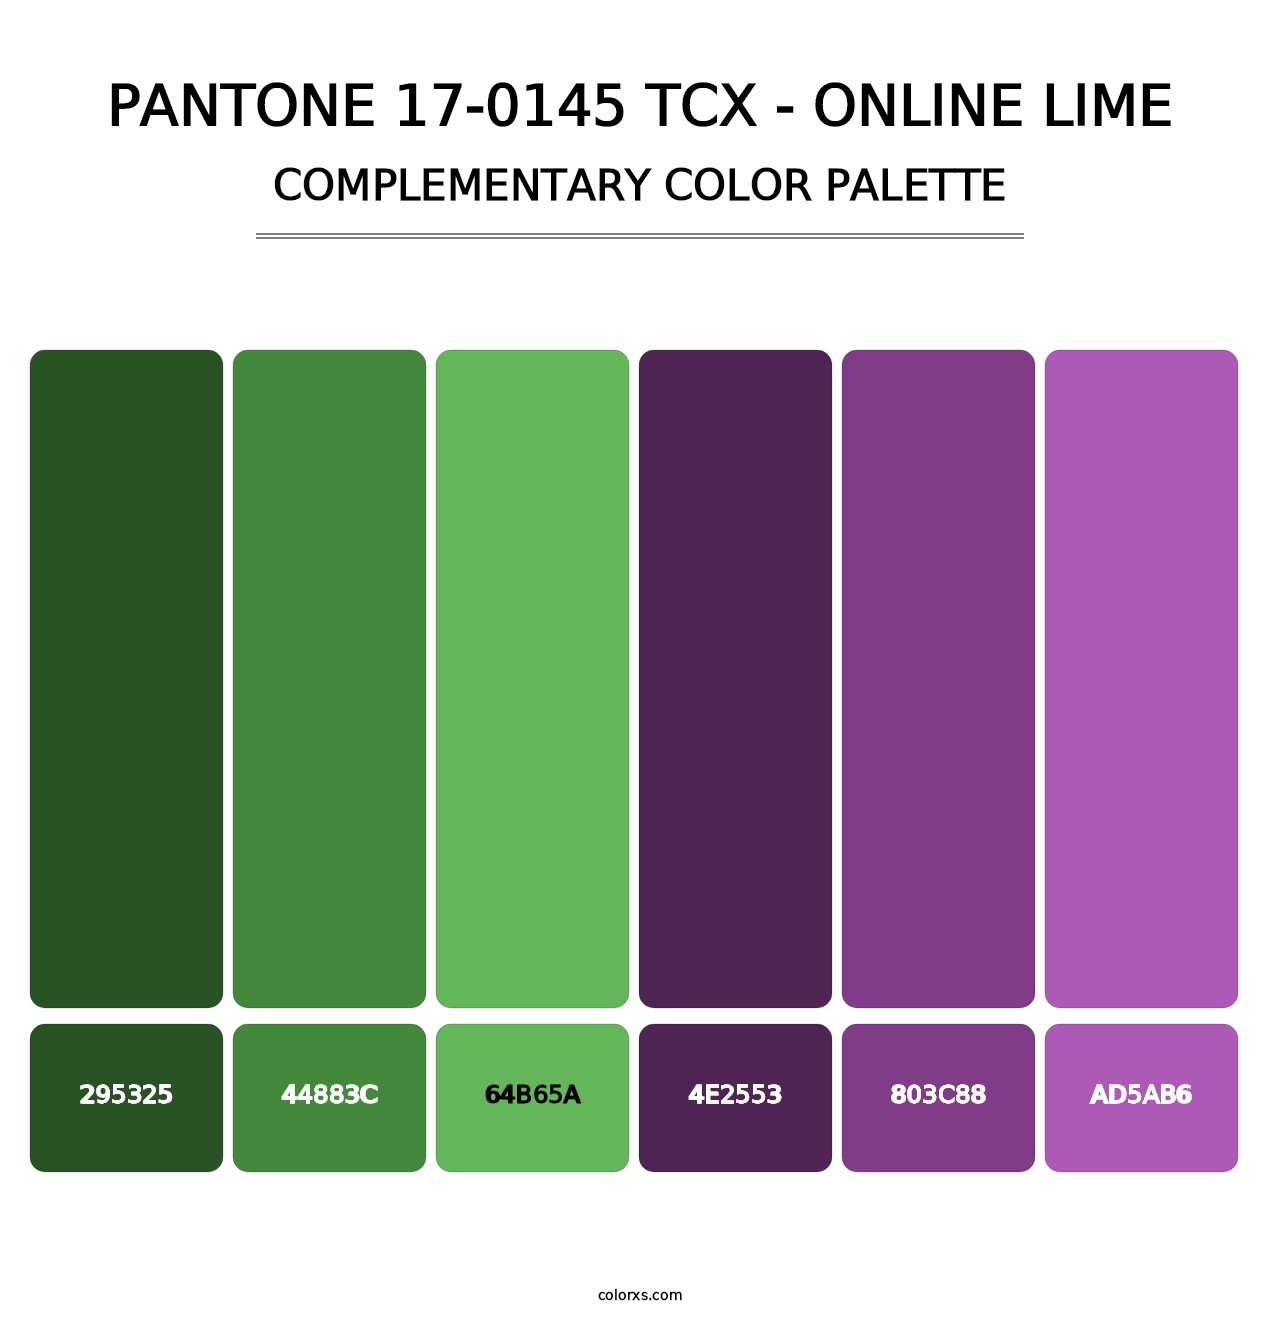 PANTONE 17-0145 TCX - Online Lime - Complementary Color Palette